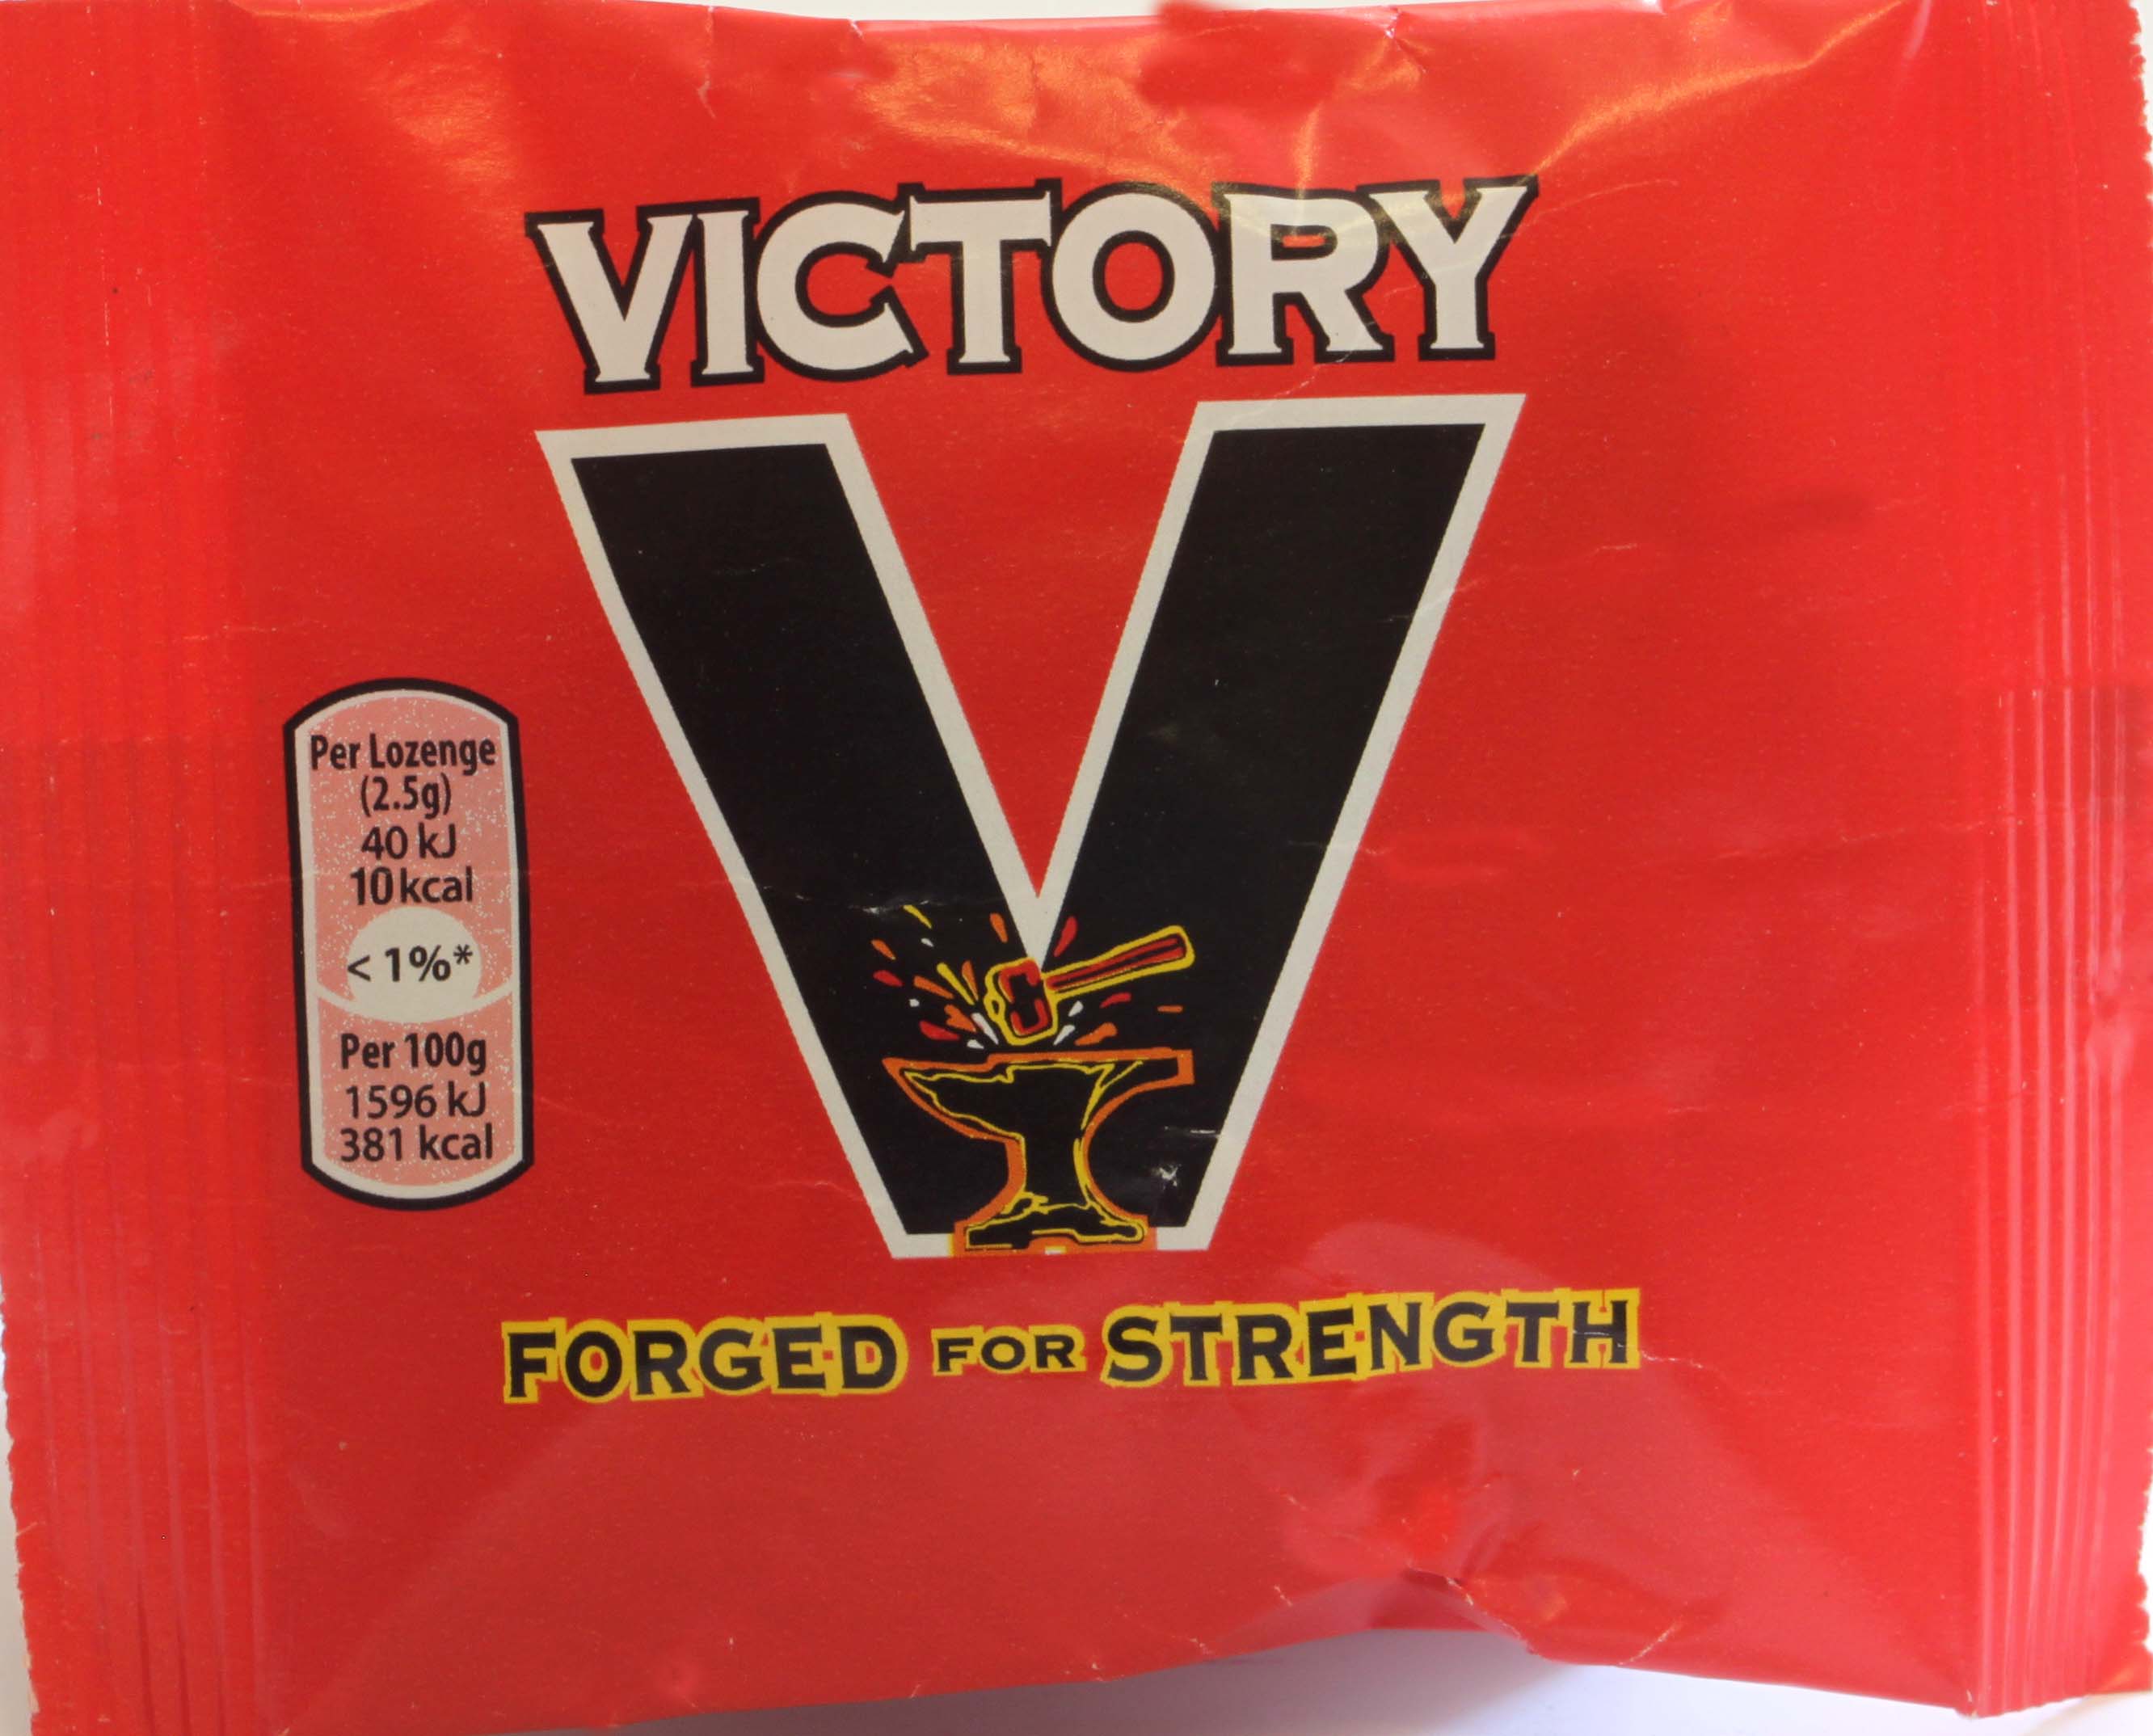 Victory V Lozenges - 45 g